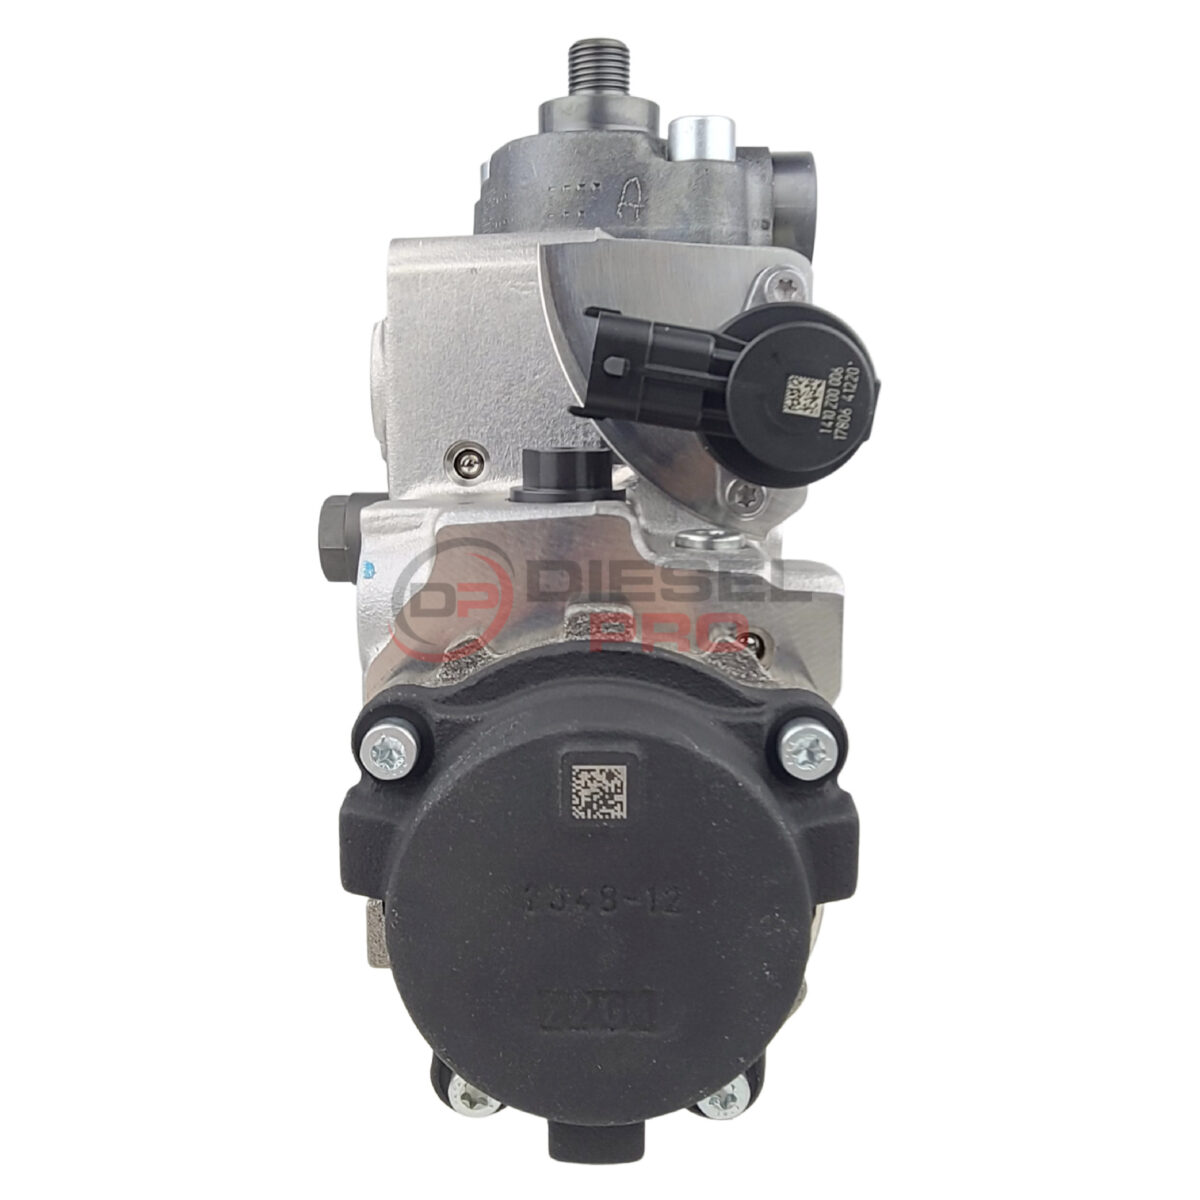 5801486599R | Bosch Fuel Pump for Case New Holland